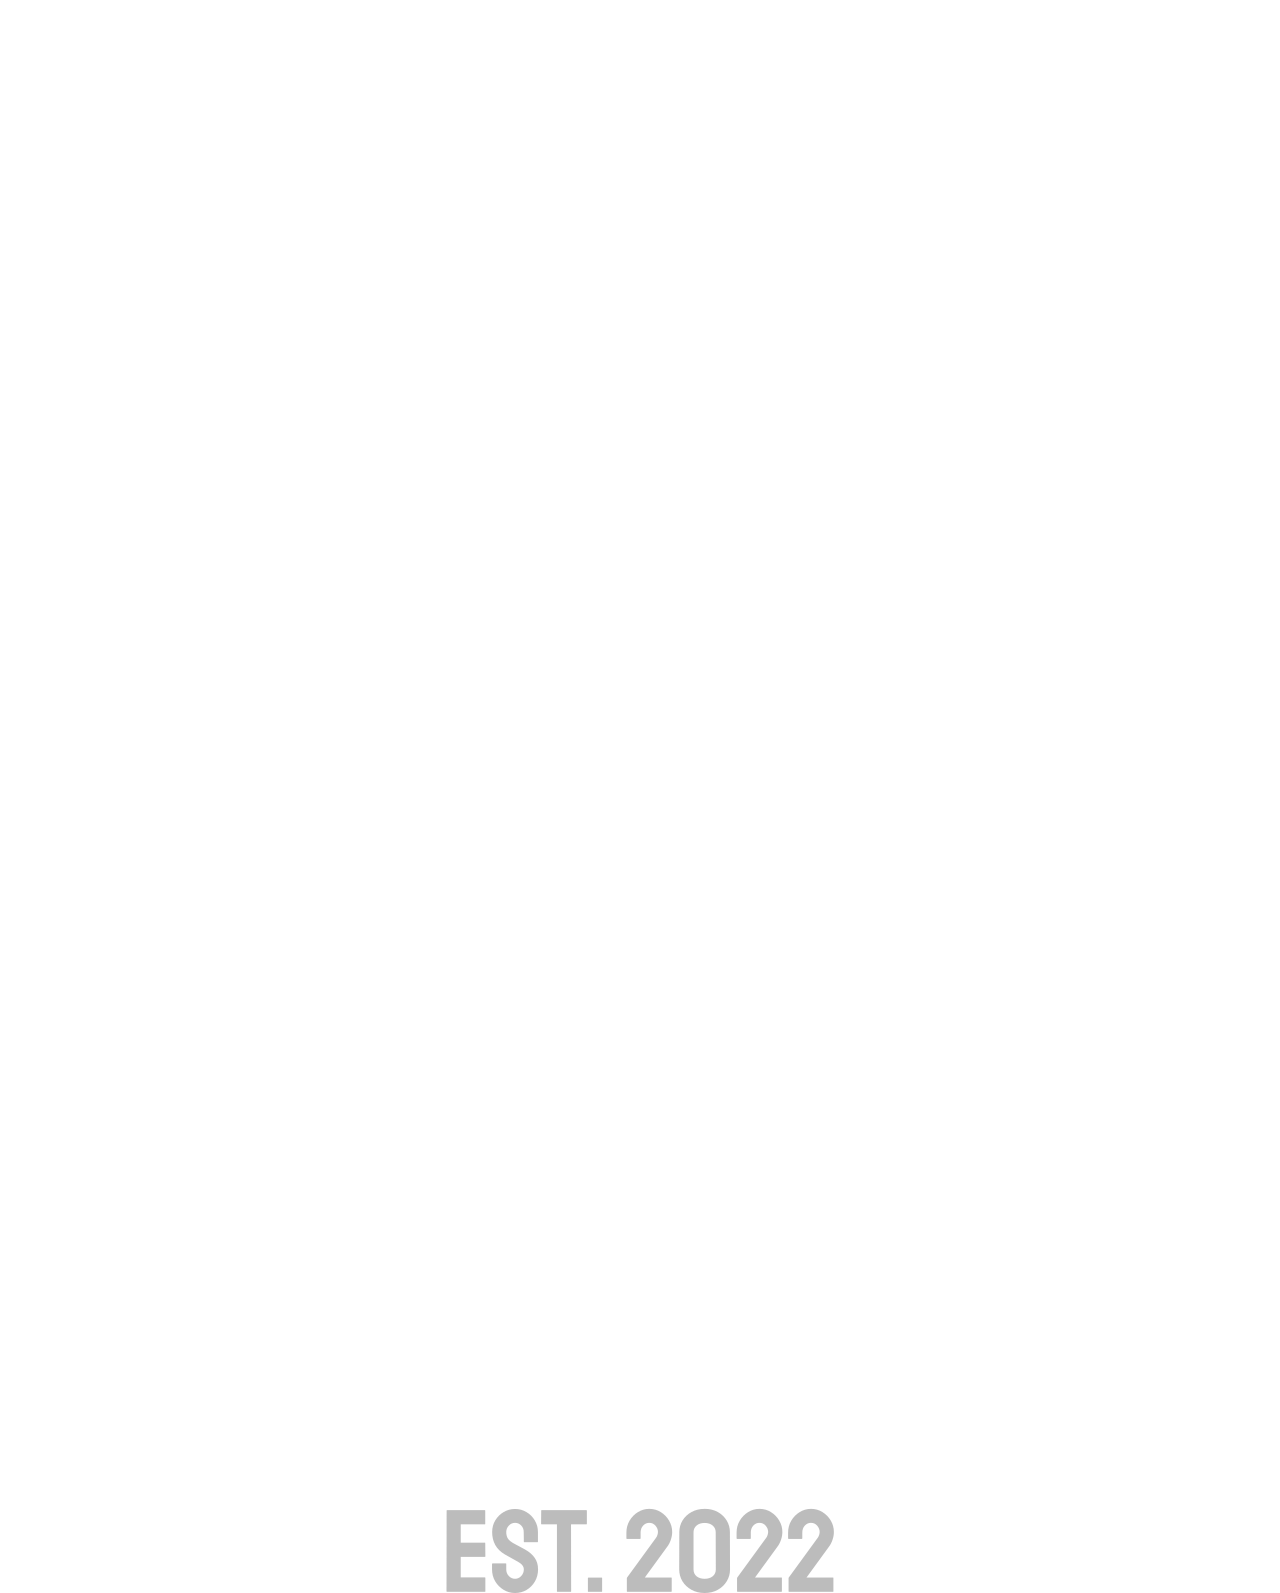 M SOUND's web page